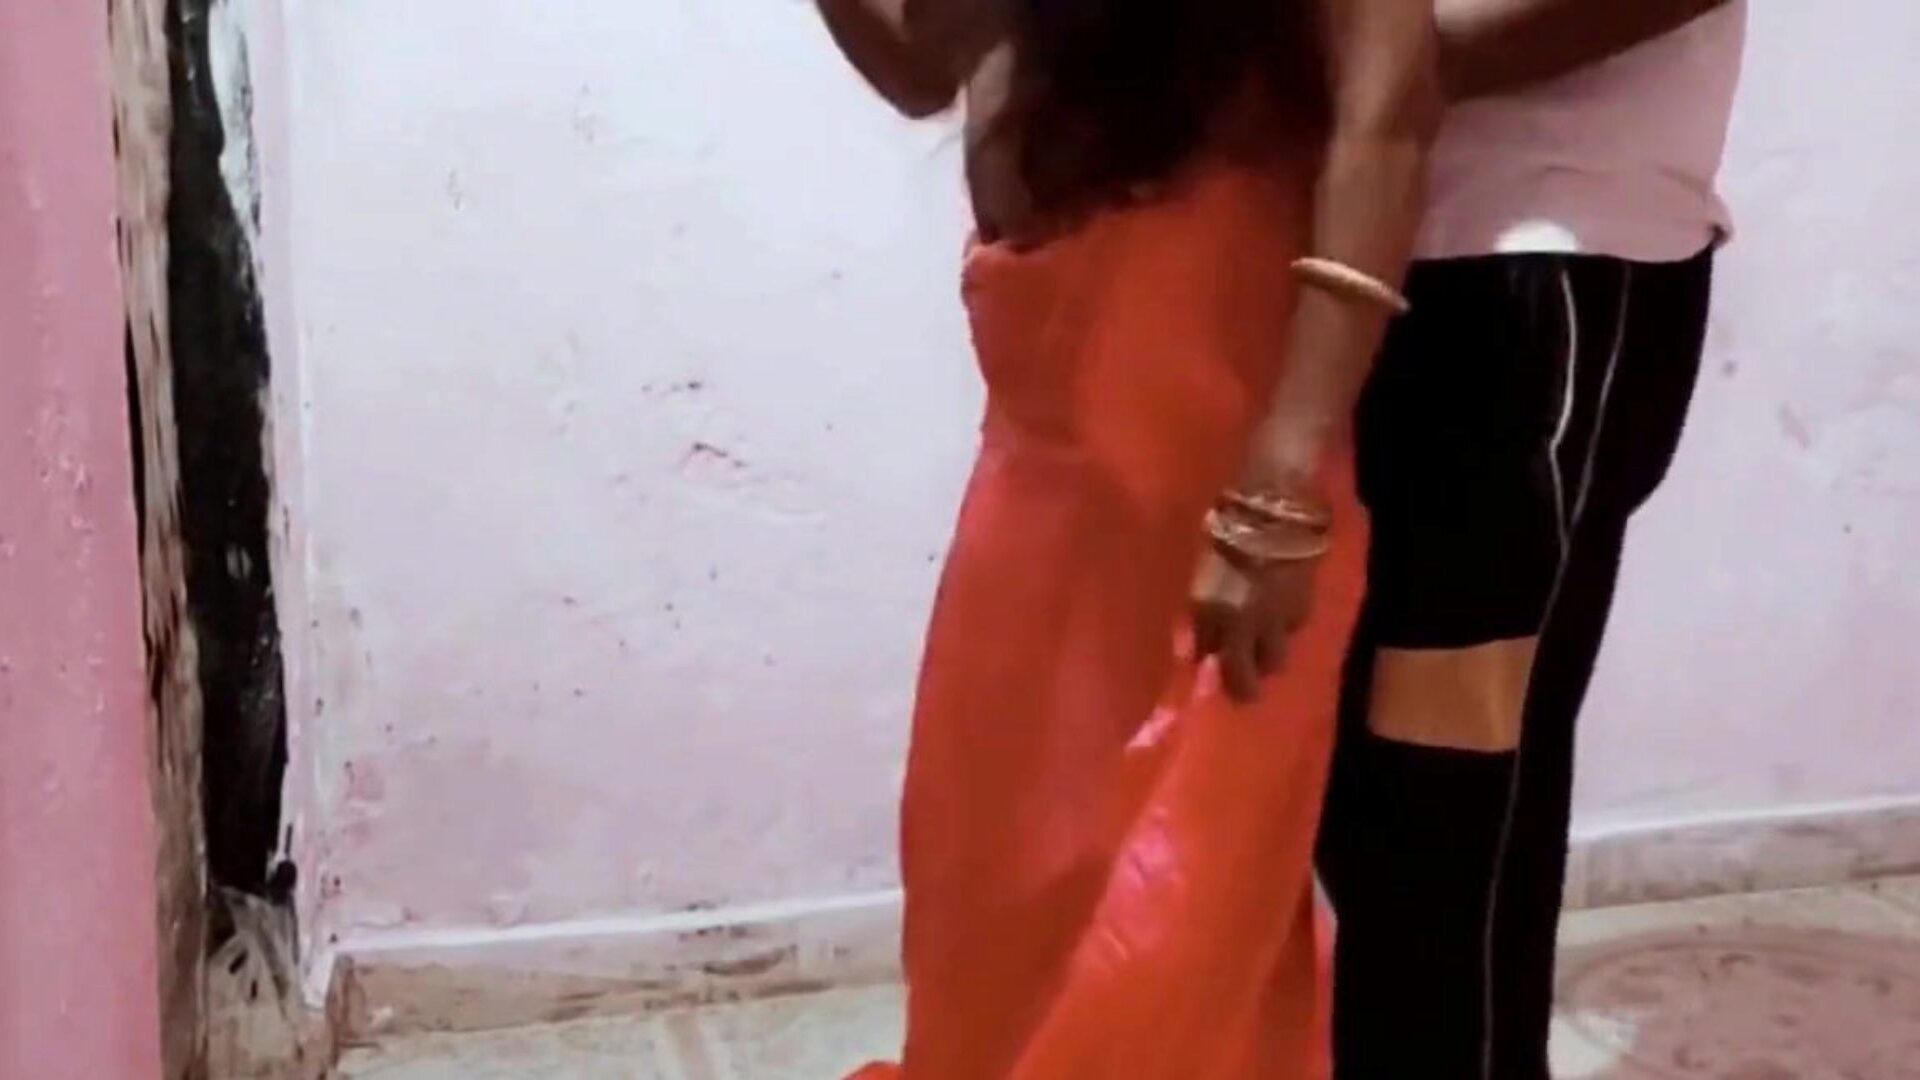 alex ne bhabhi ko choda værelse sjov med hendes husbond: gratis porno b9 se alex ne bhabhi ko choda værelse sjov med hendes husbond episode på xhamster - det ultimative arkiv med gratis Sri Lanka asiatiske HD hardcore porno tube film